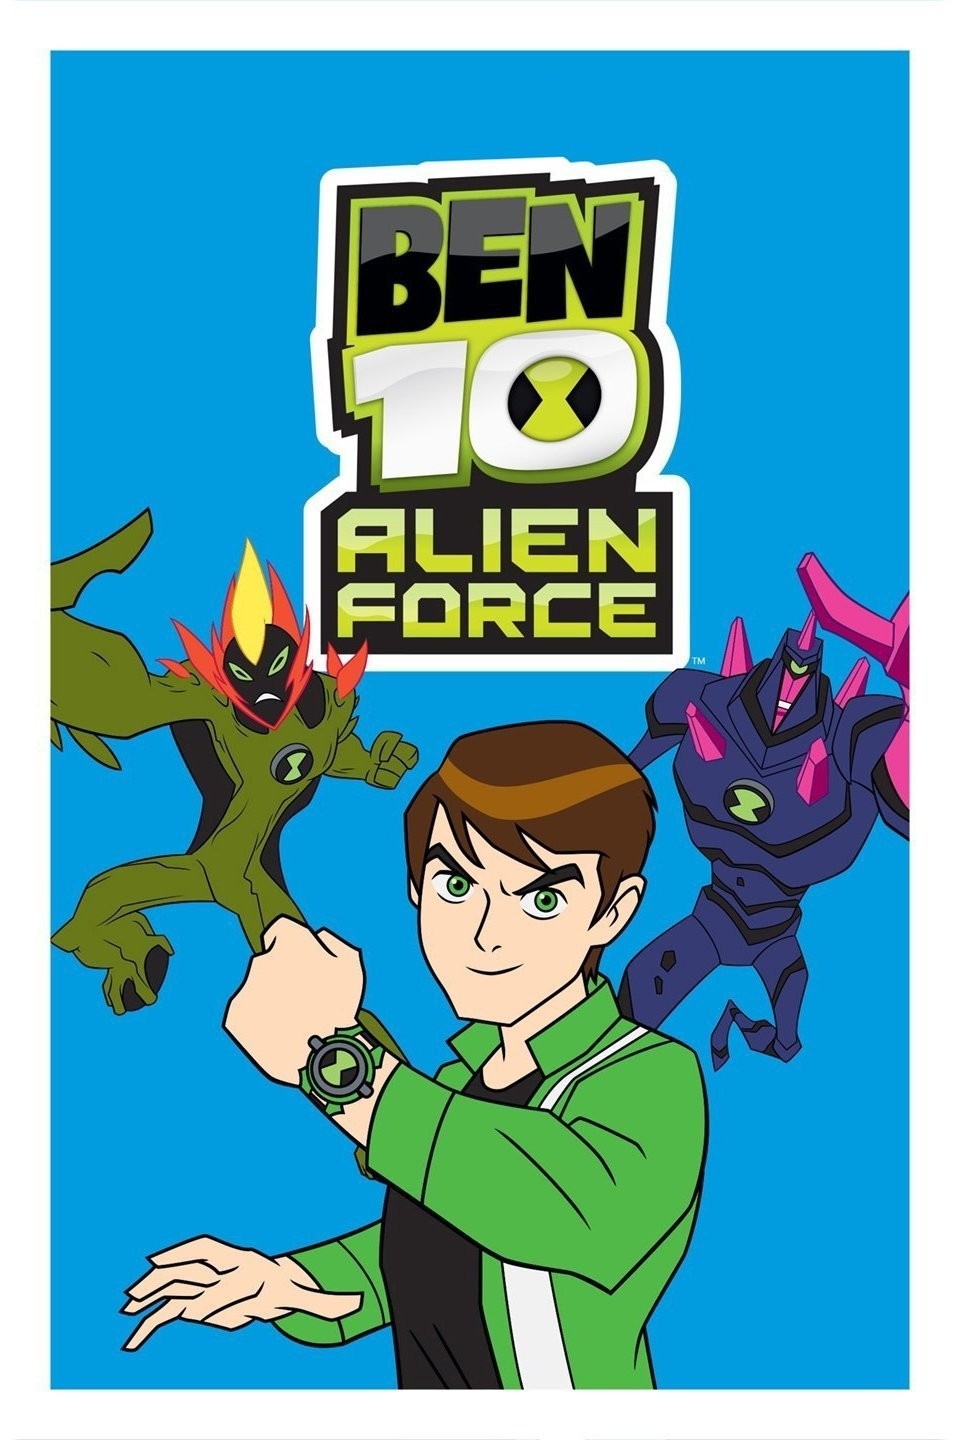 Ben 10 alien force, ben, games, cartoon network, HD wallpaper